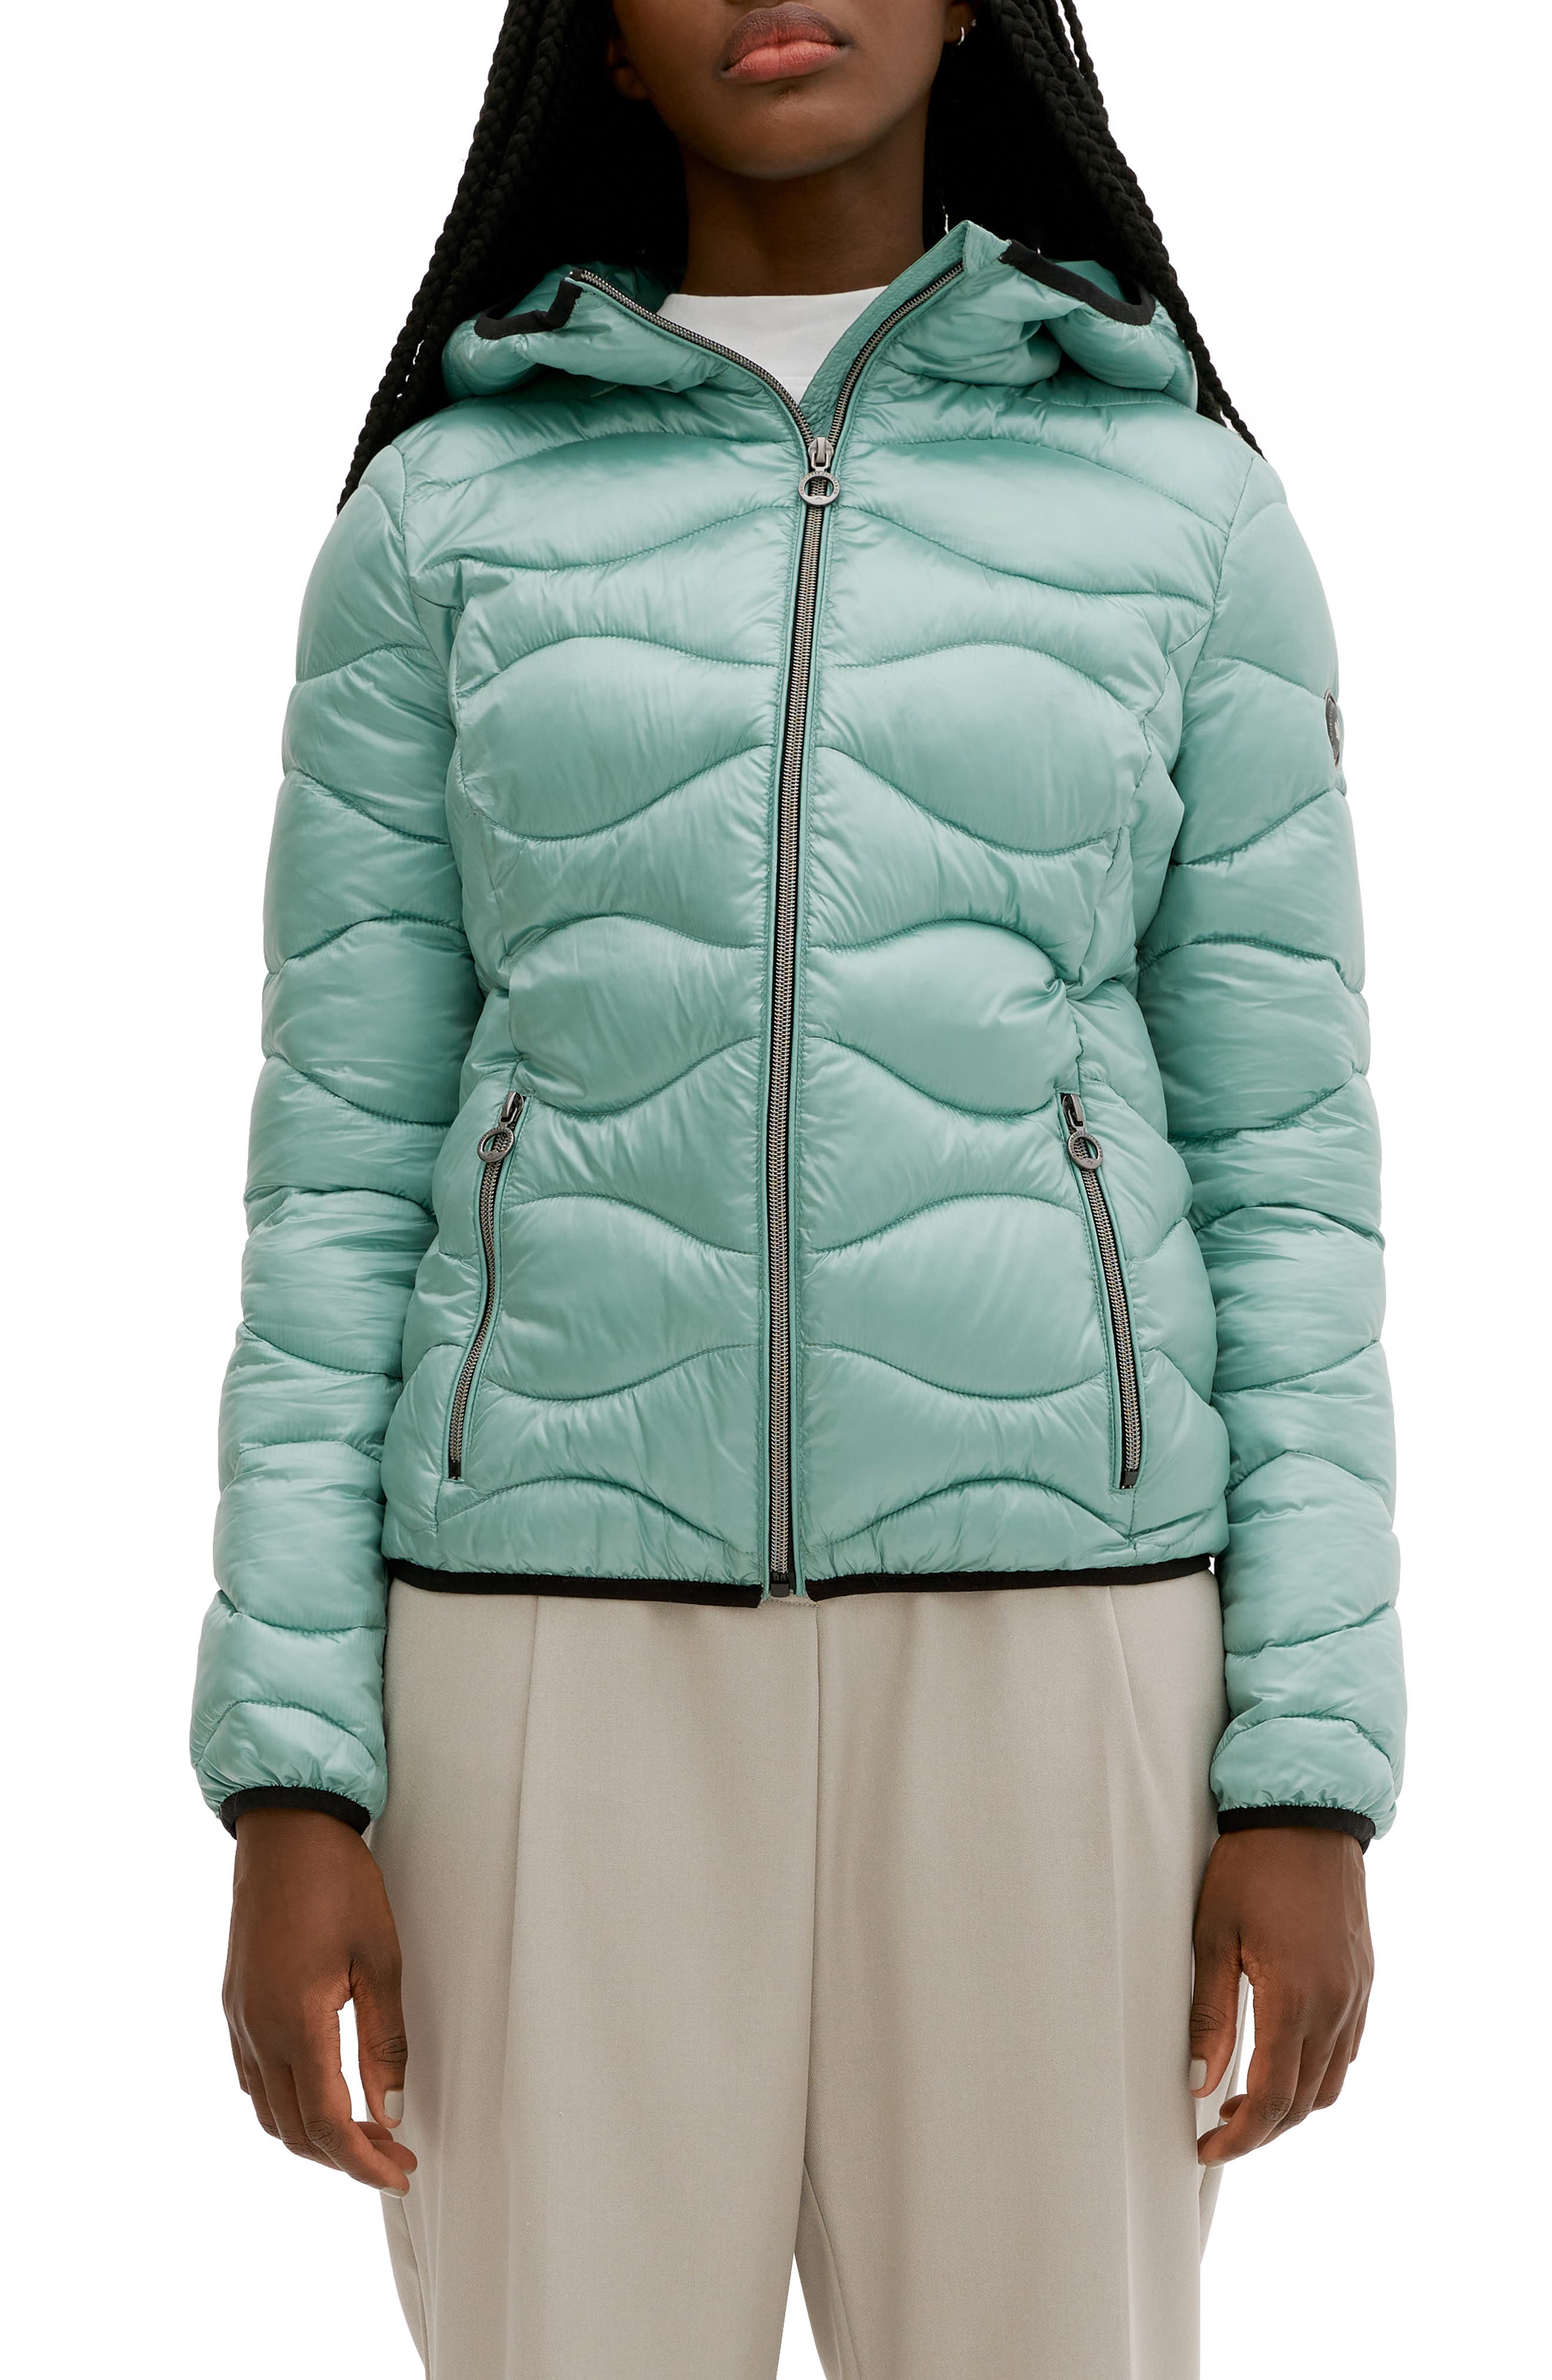 Size 18 20 New Ladies Quilted Padded Zip Popper Jacket Women's Coat Aqua 